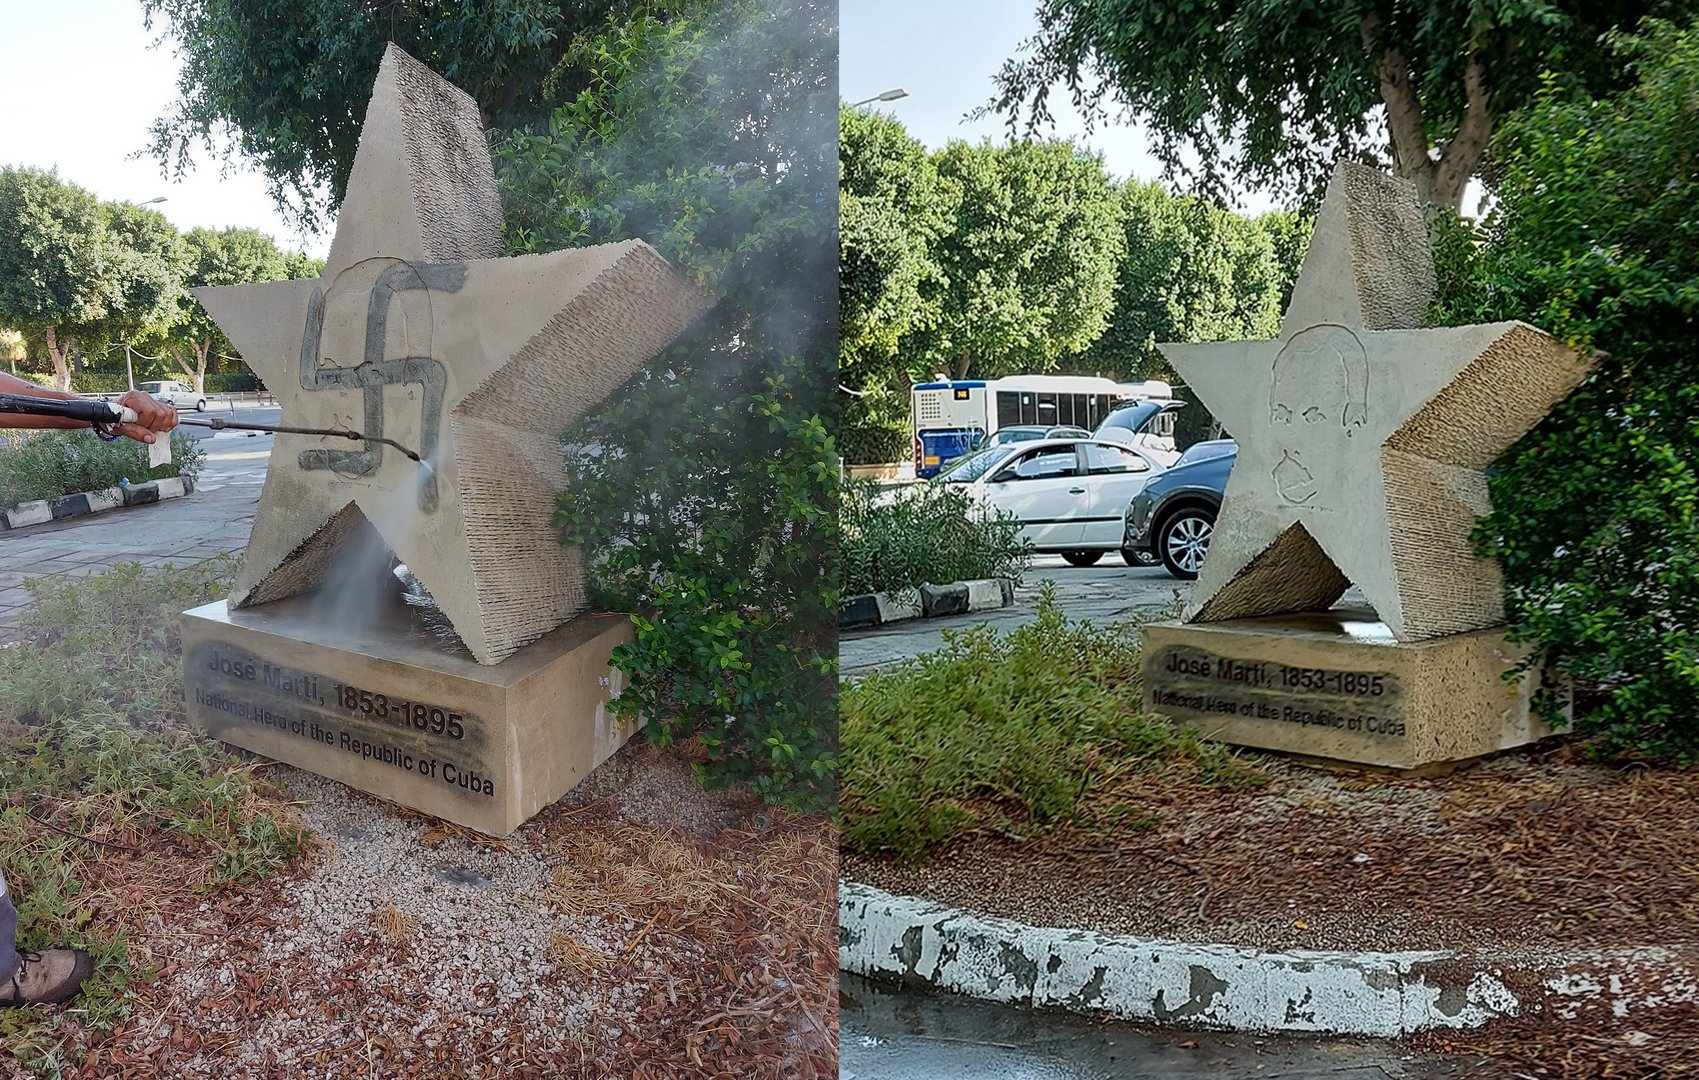 image Nicosia municipality removes swastika graffiti from monument